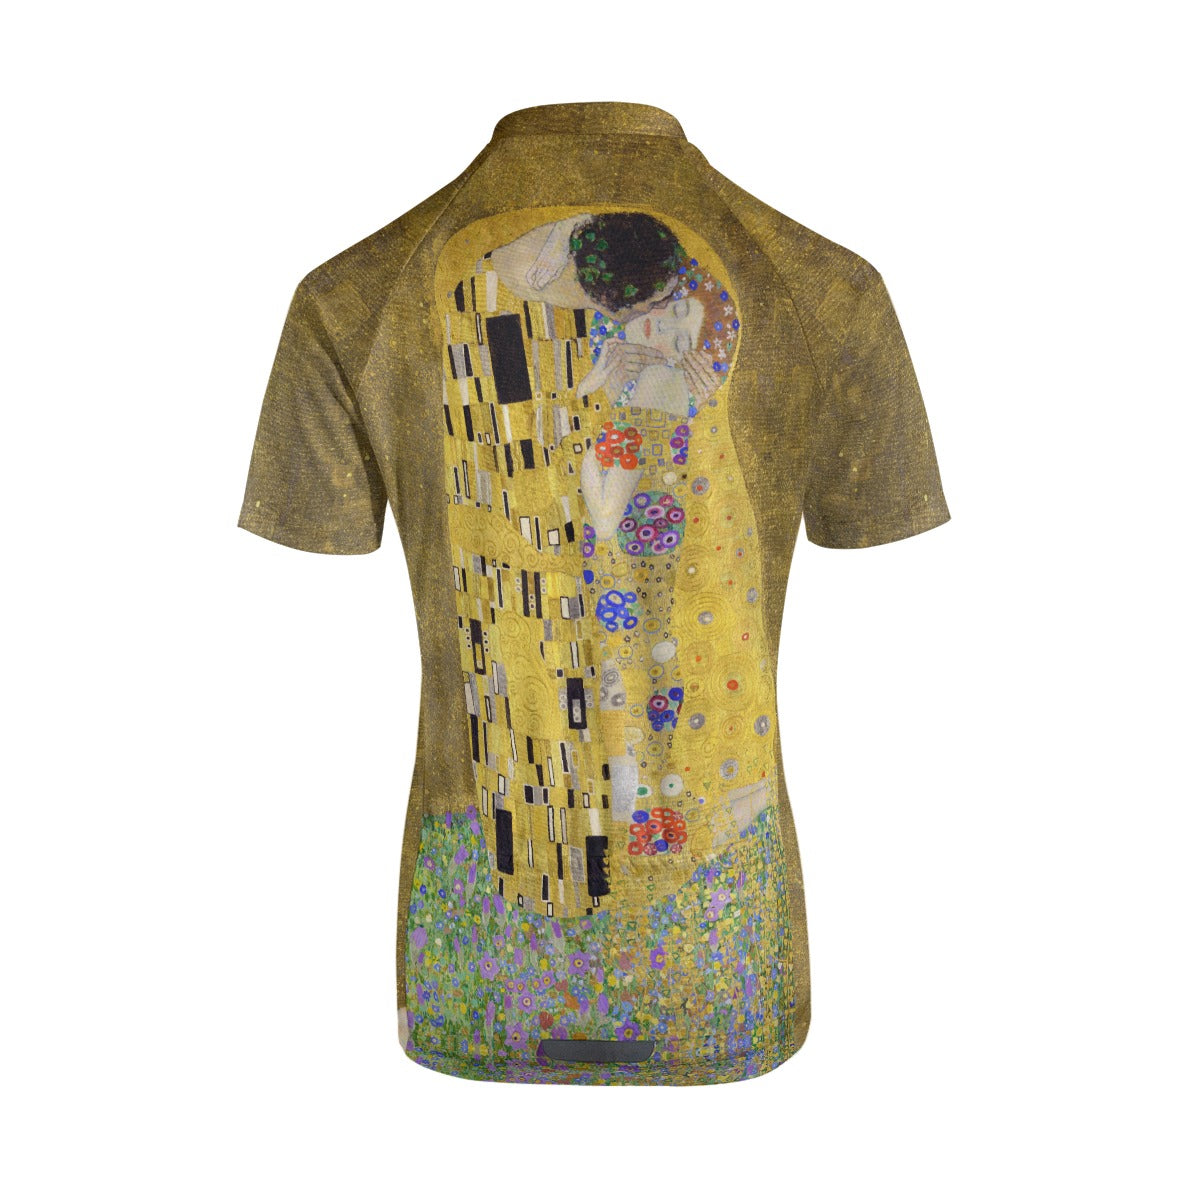 Gustav Klimt Inspired Cycling Wear - Back View